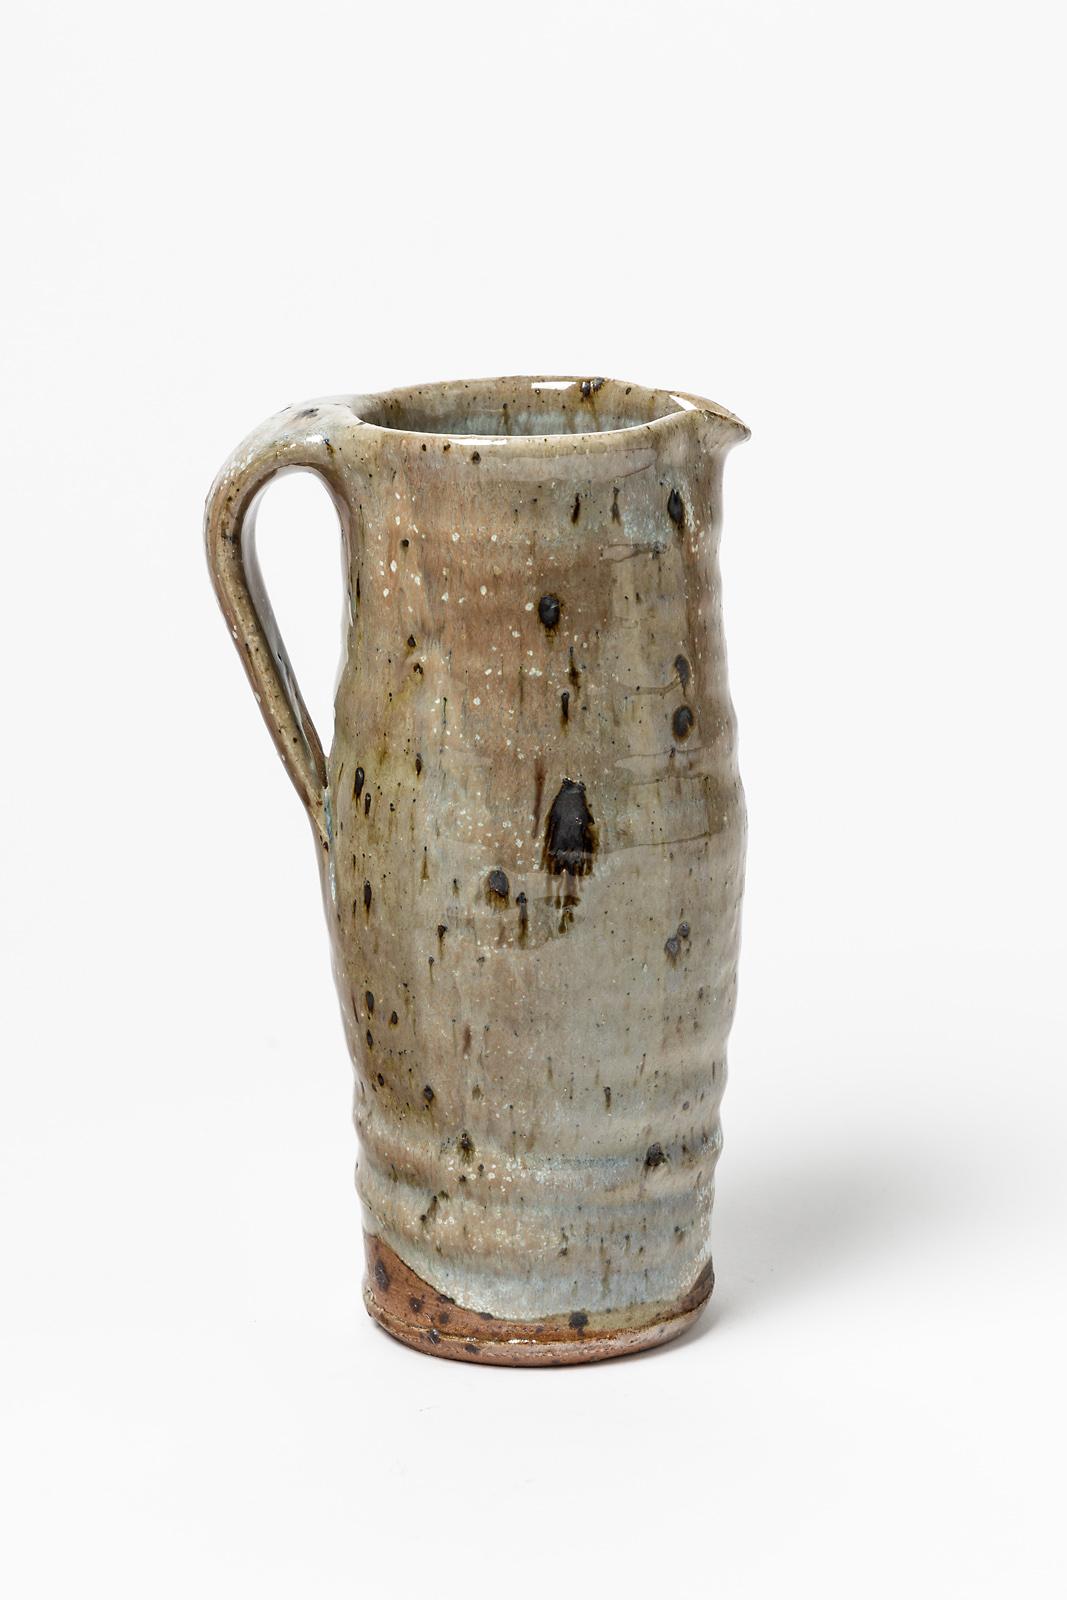 20th Century Midcentury Colored Stoneware Ceramic Pitcher or Vase by Schlichenmaier handmade For Sale